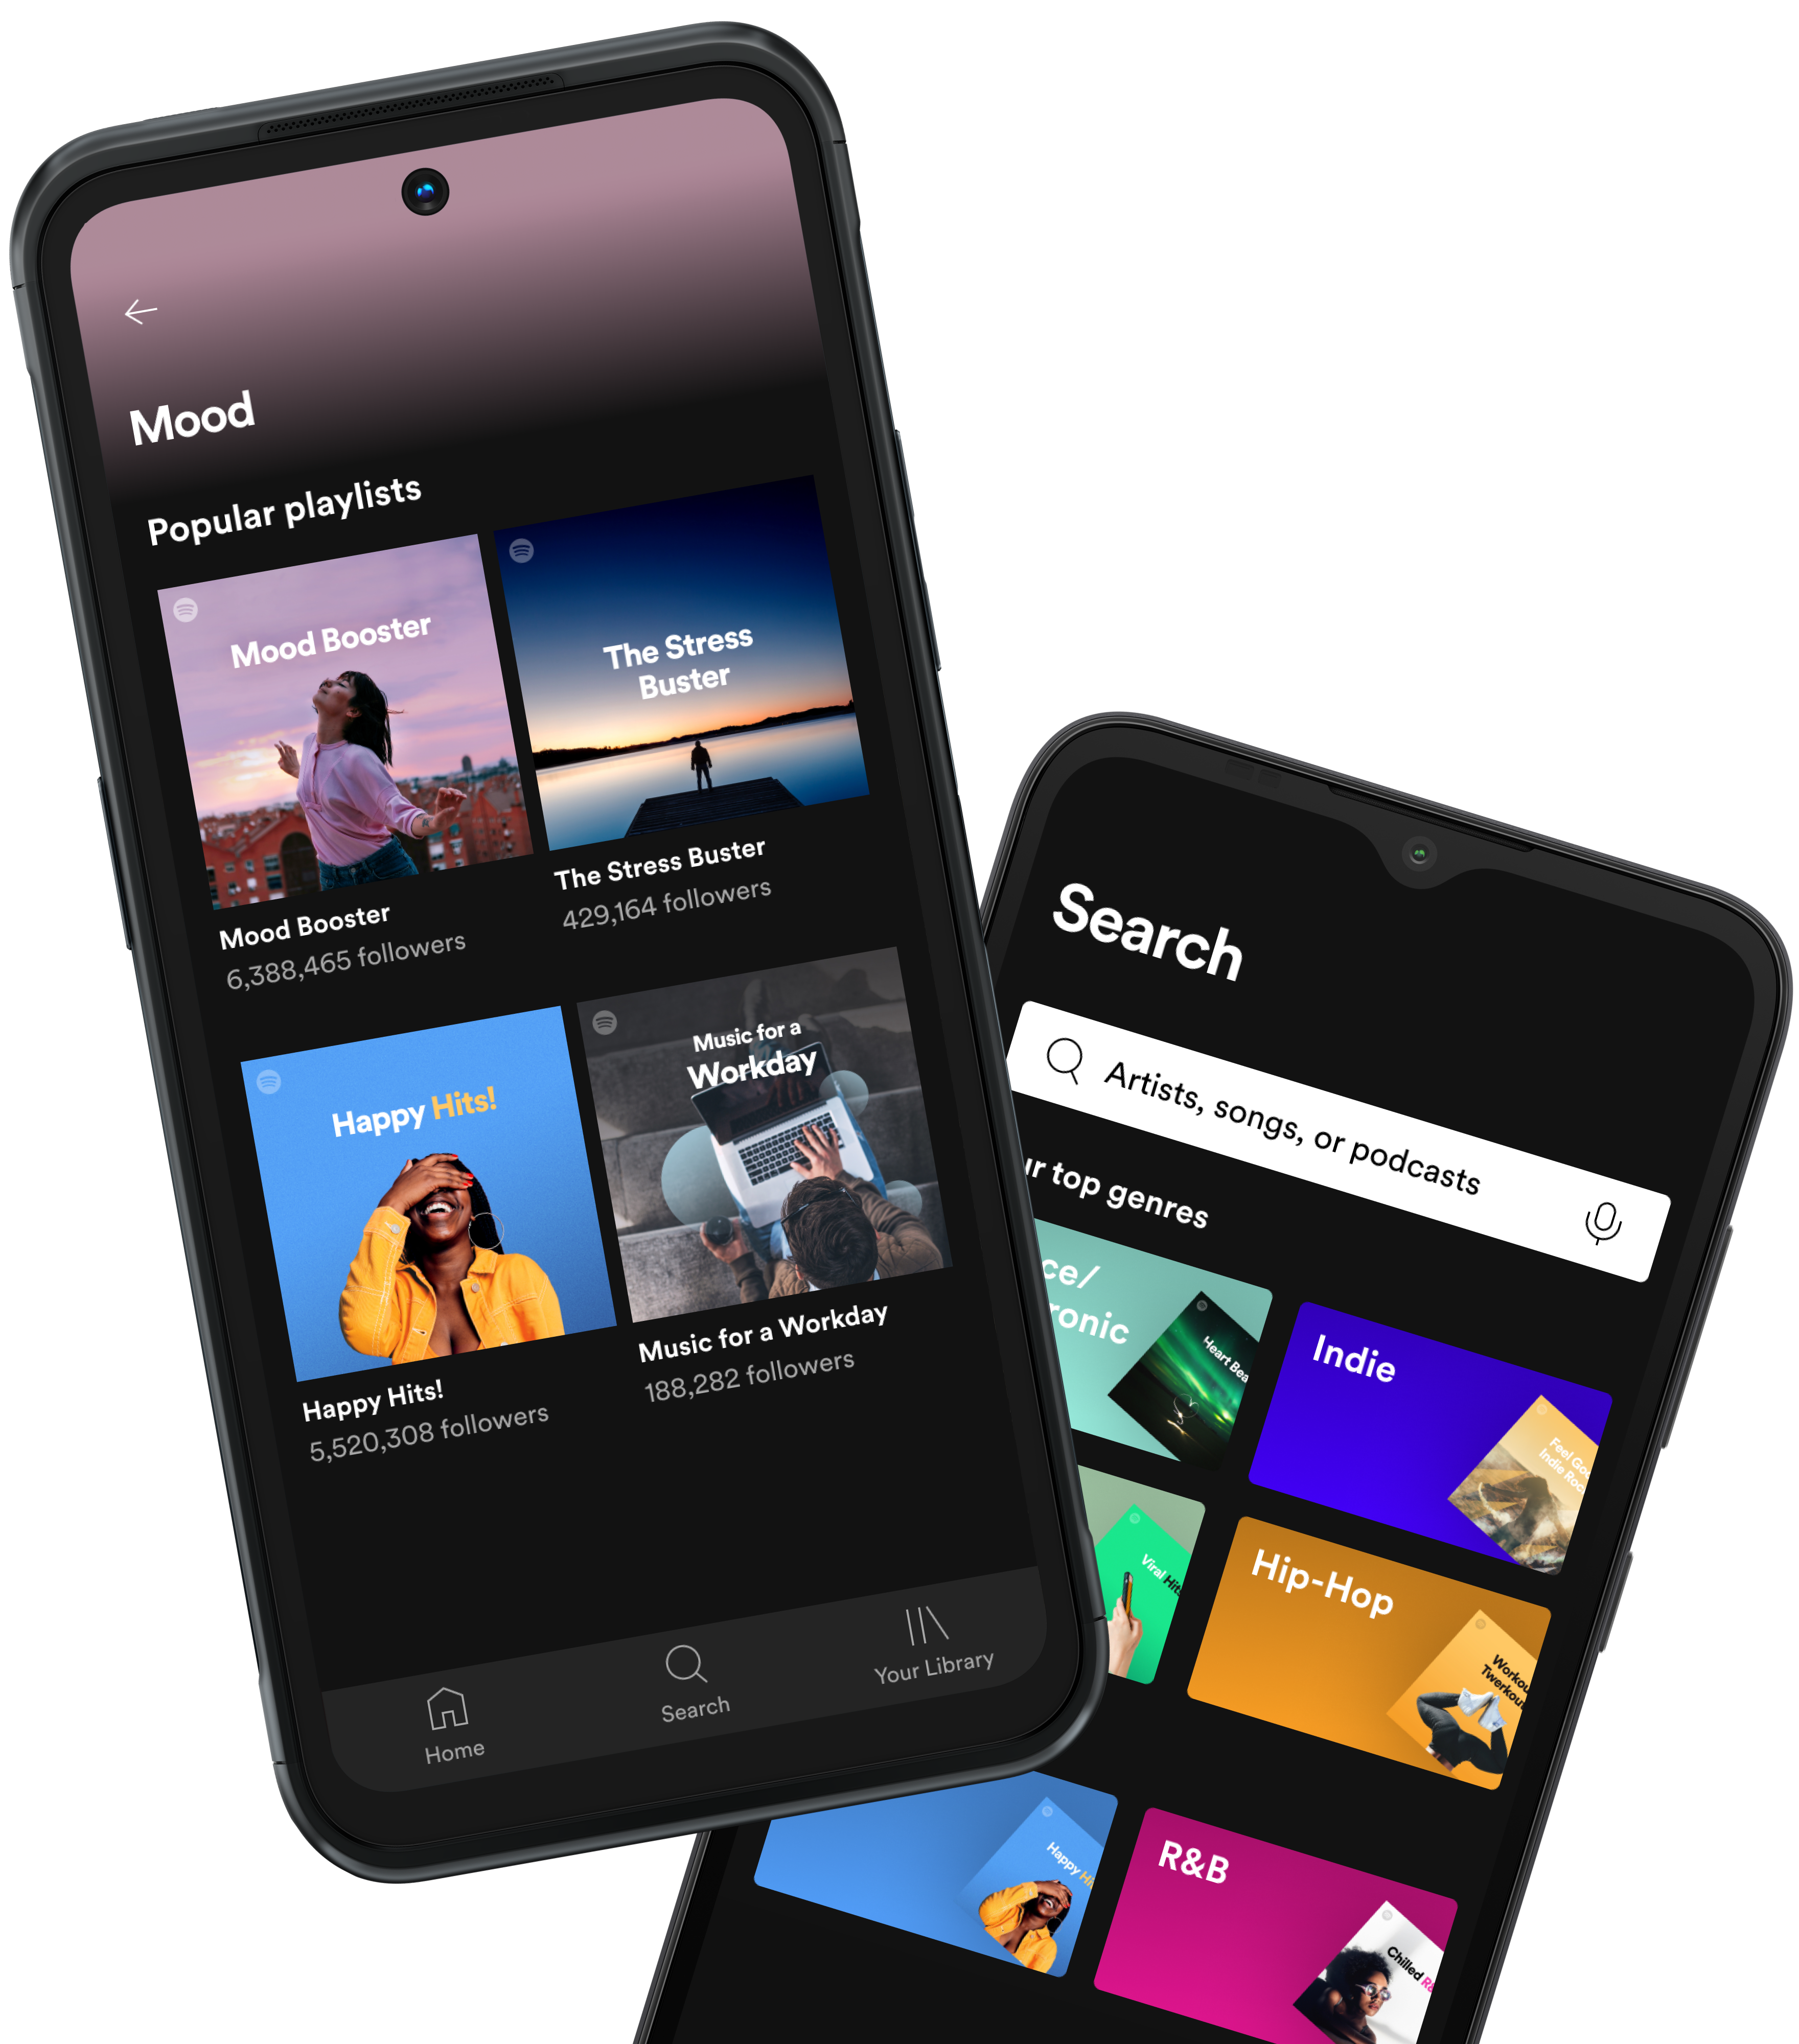 Nokia smartphones browsing the Spotify app